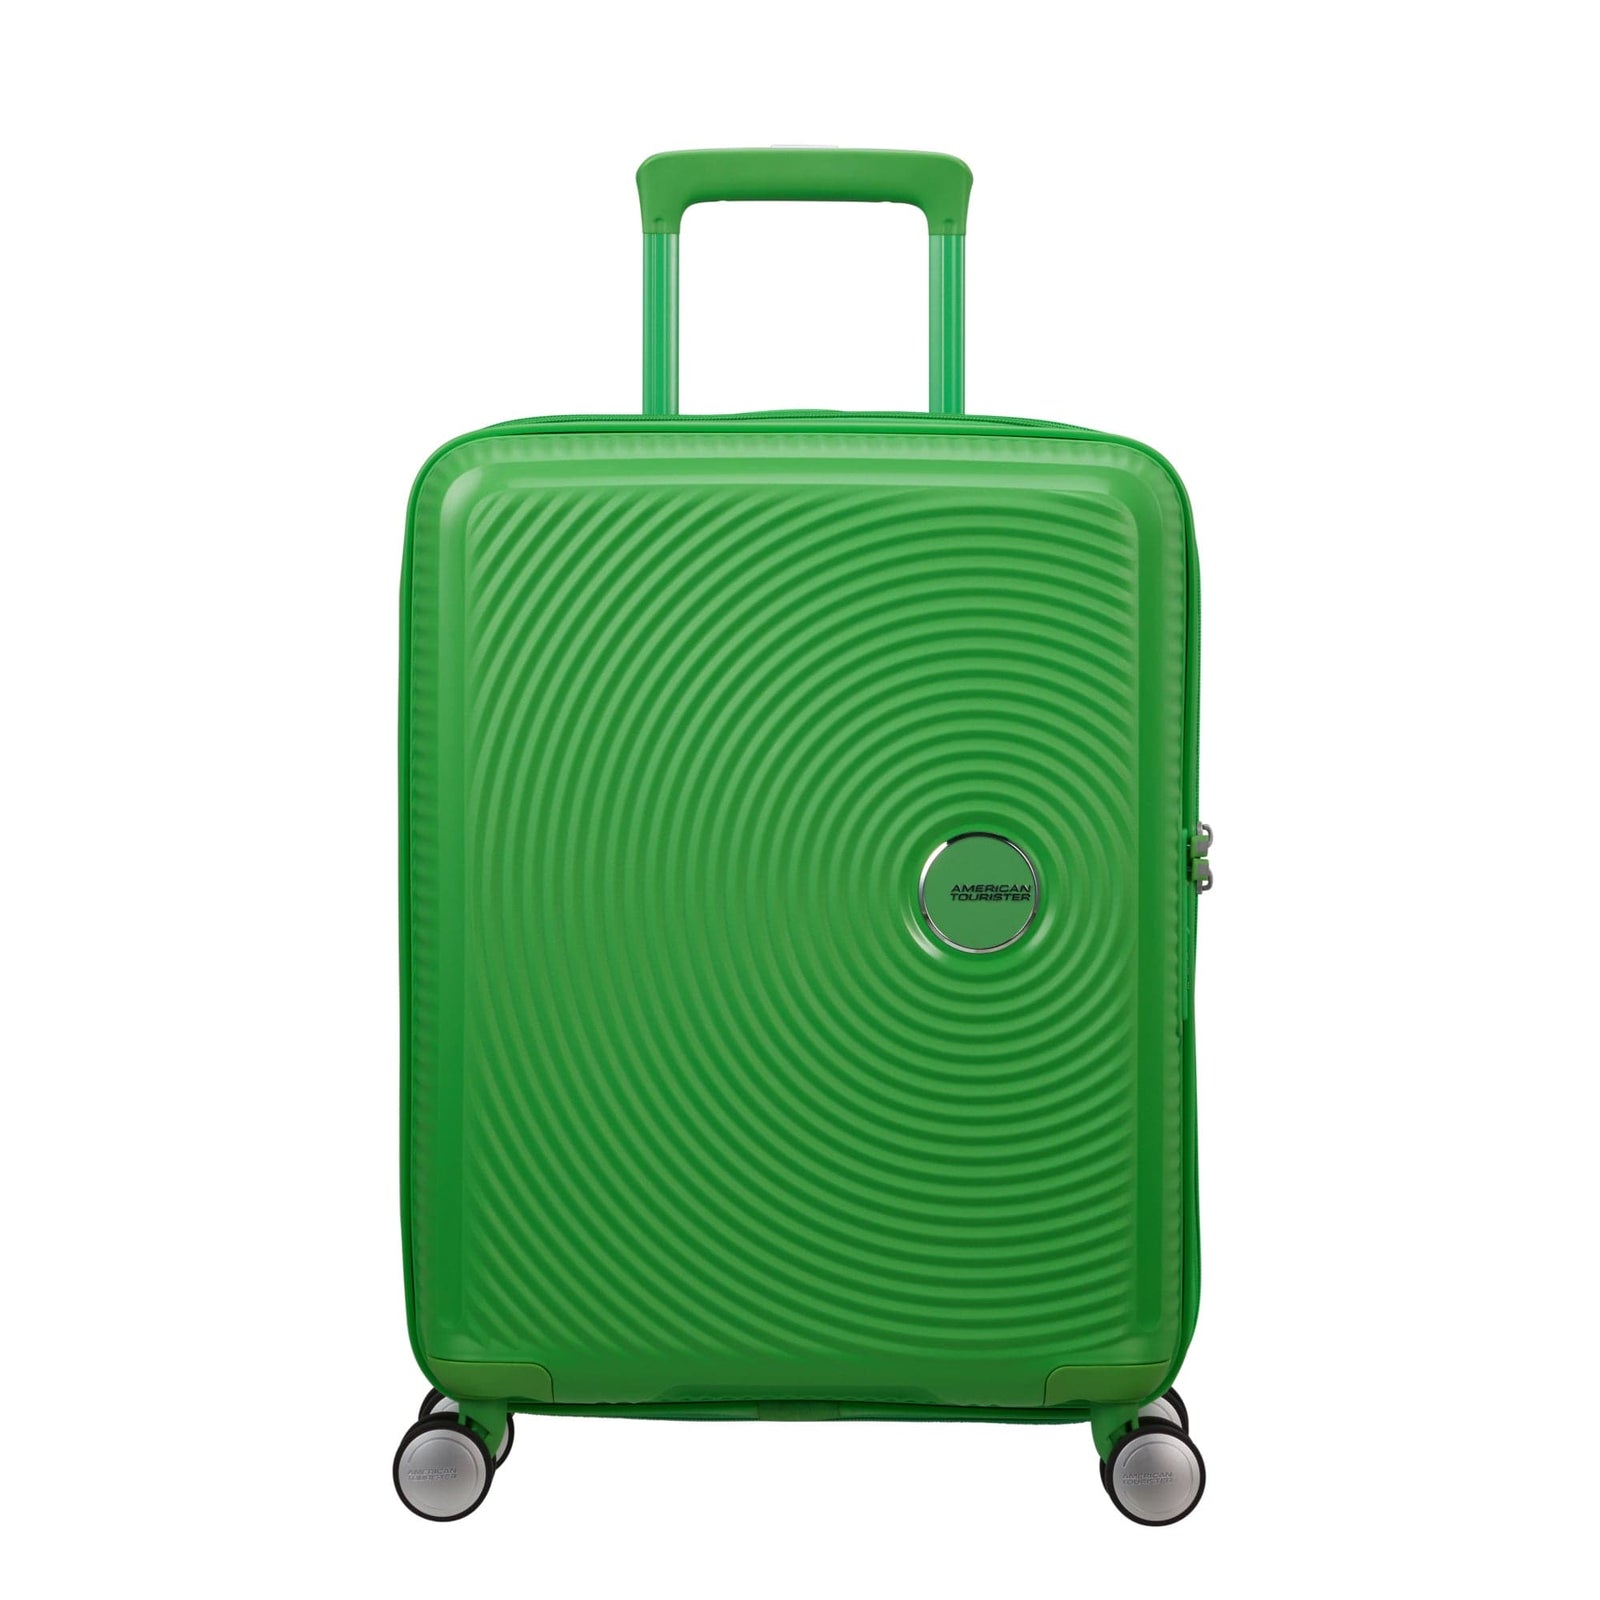 American Tourister SoundBox 55 cm Cabin luggage in Green Glass